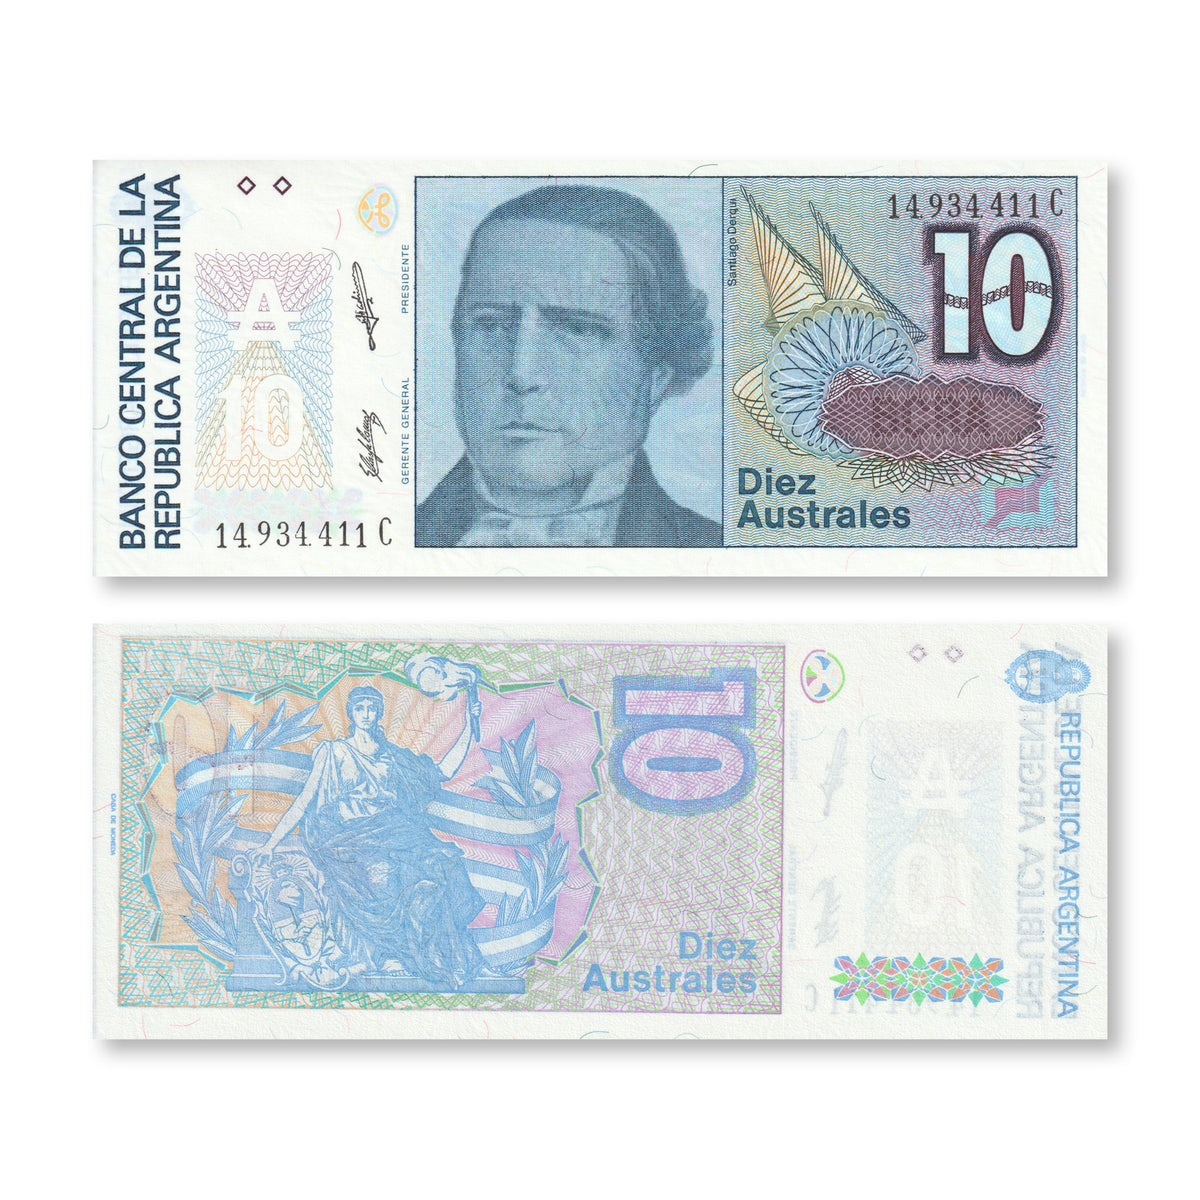 Argentina 10 Australes, 1987, B378b, P325b, UNC - Robert's World Money - World Banknotes